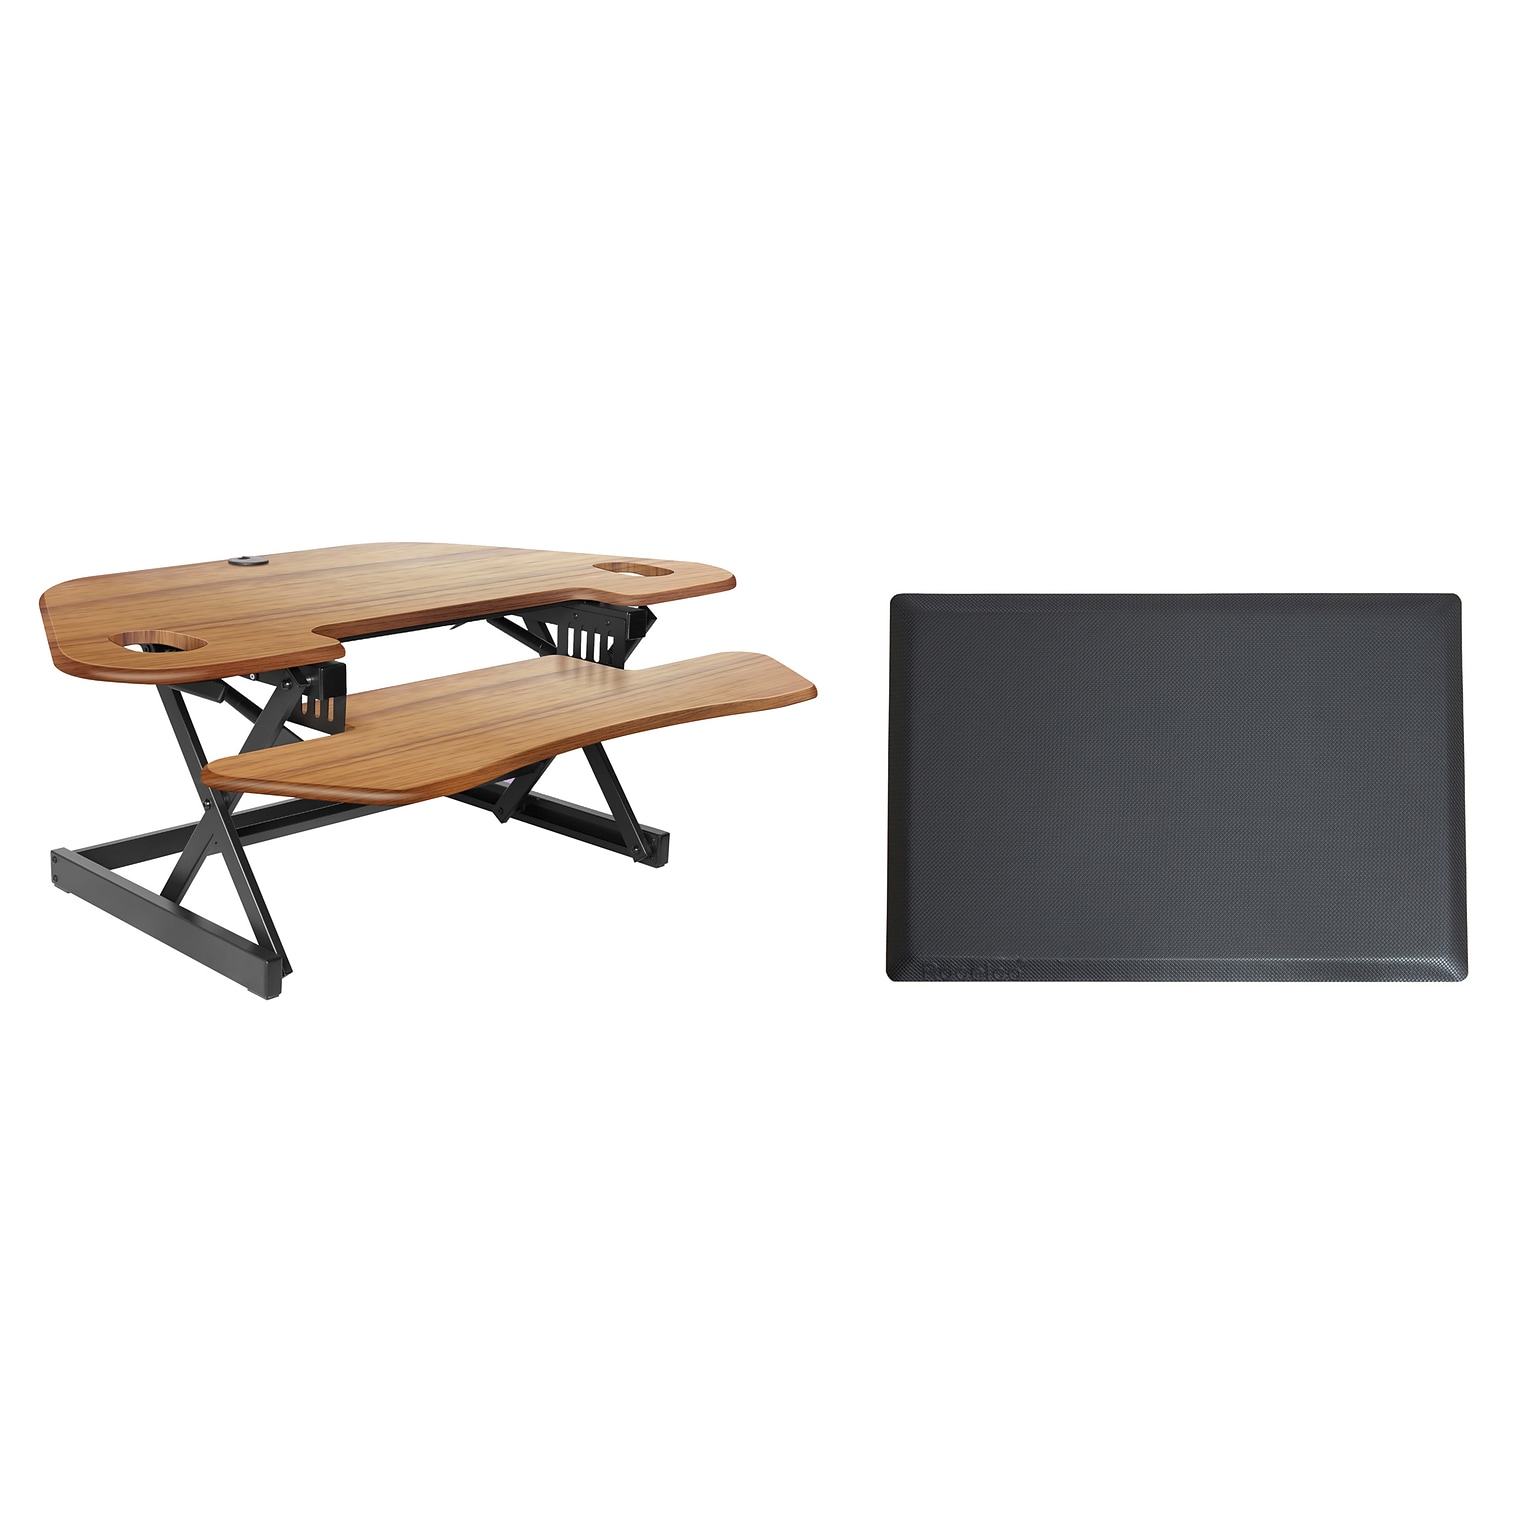 Rocelco 46W 5-18H Adjustable Corner Standing Desk Converter with Anti Fatigue Mat, Teak Wood Grain (R CADRT-46-MAFM)